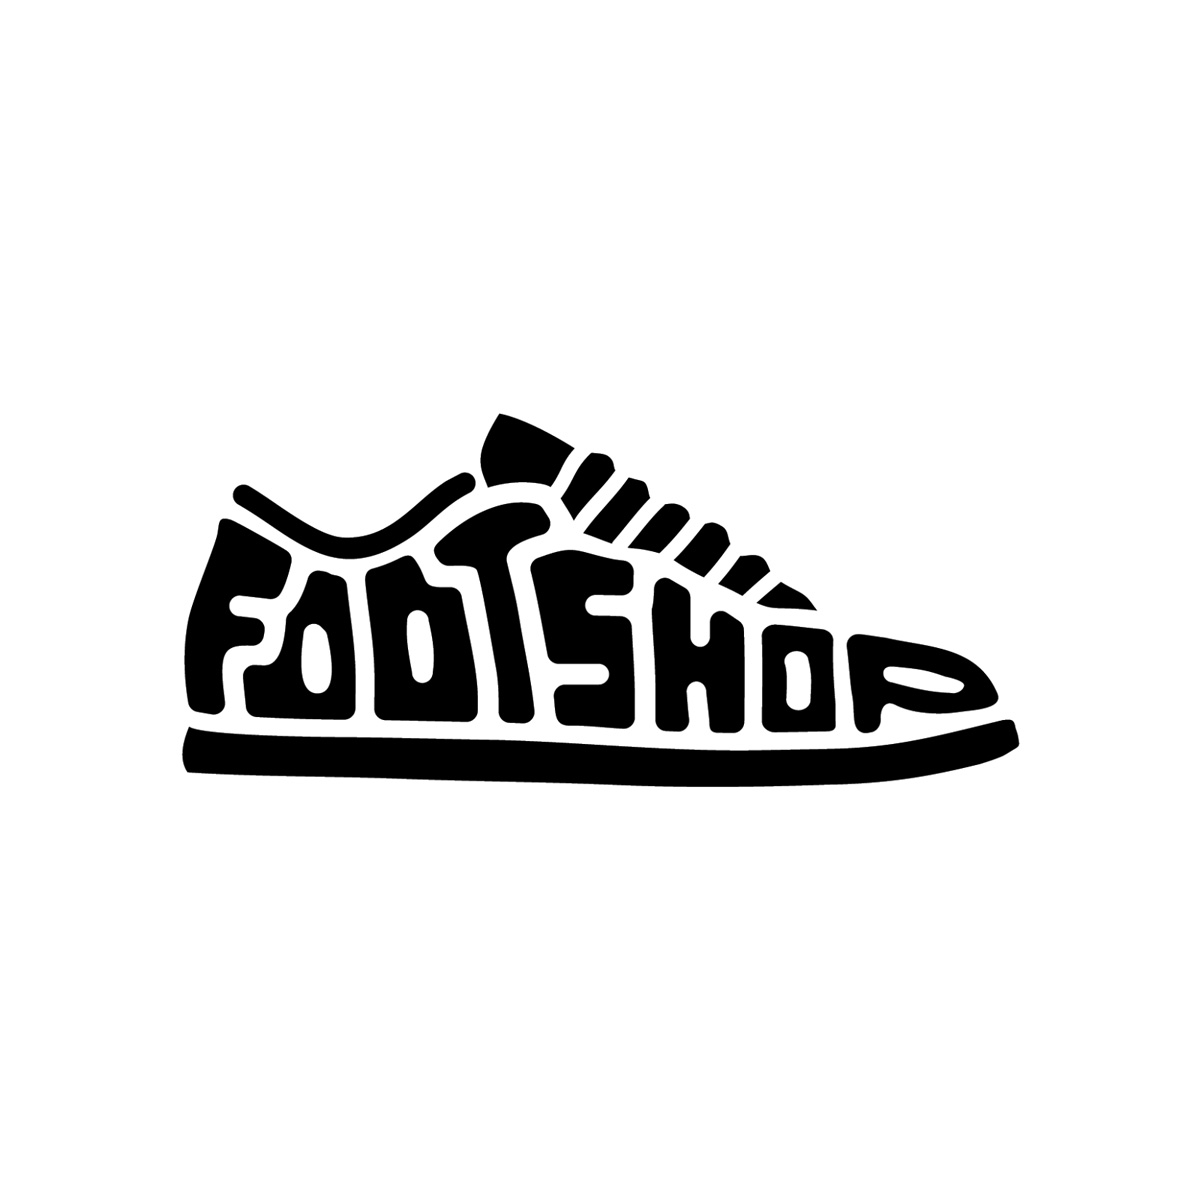 Sneakers logo. Логотип кроссовок. Логотип магазина кроссовок. Кроссовки иконка. Логотипы спортивной обуви.